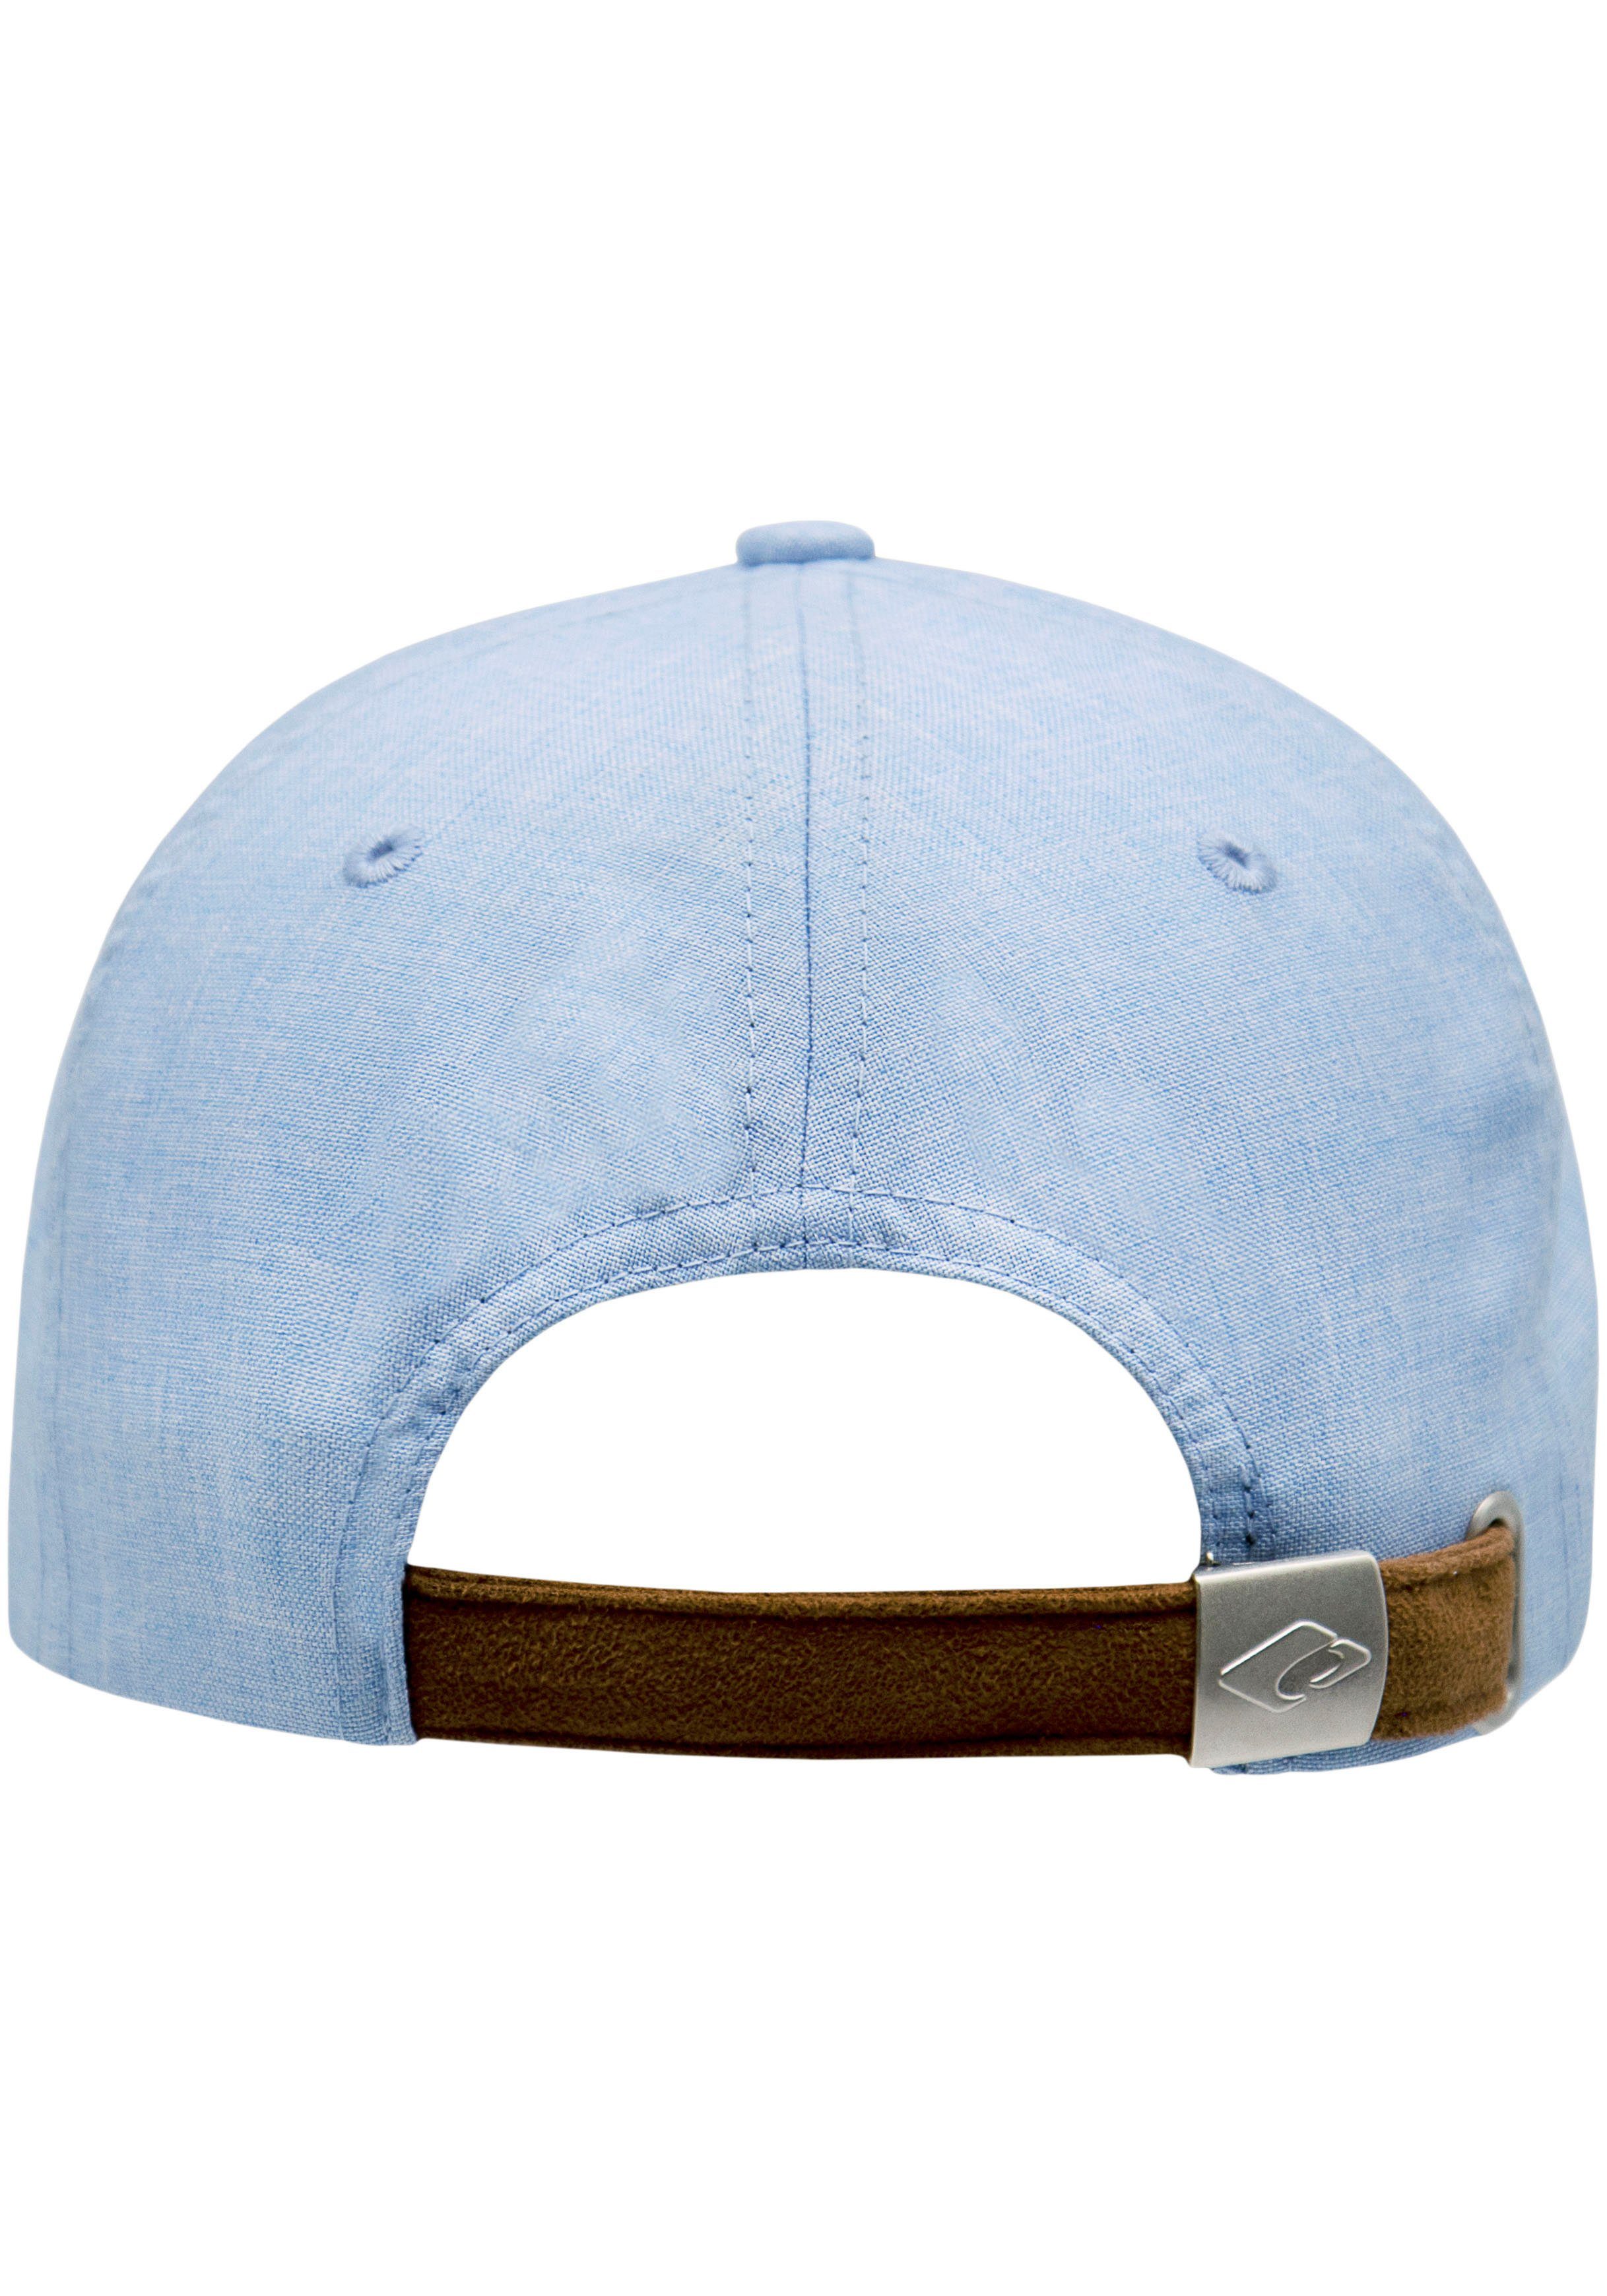 Optik, hellblau verstellbar Amadora in chillouts Cap One Hat Size, melierter Baseball